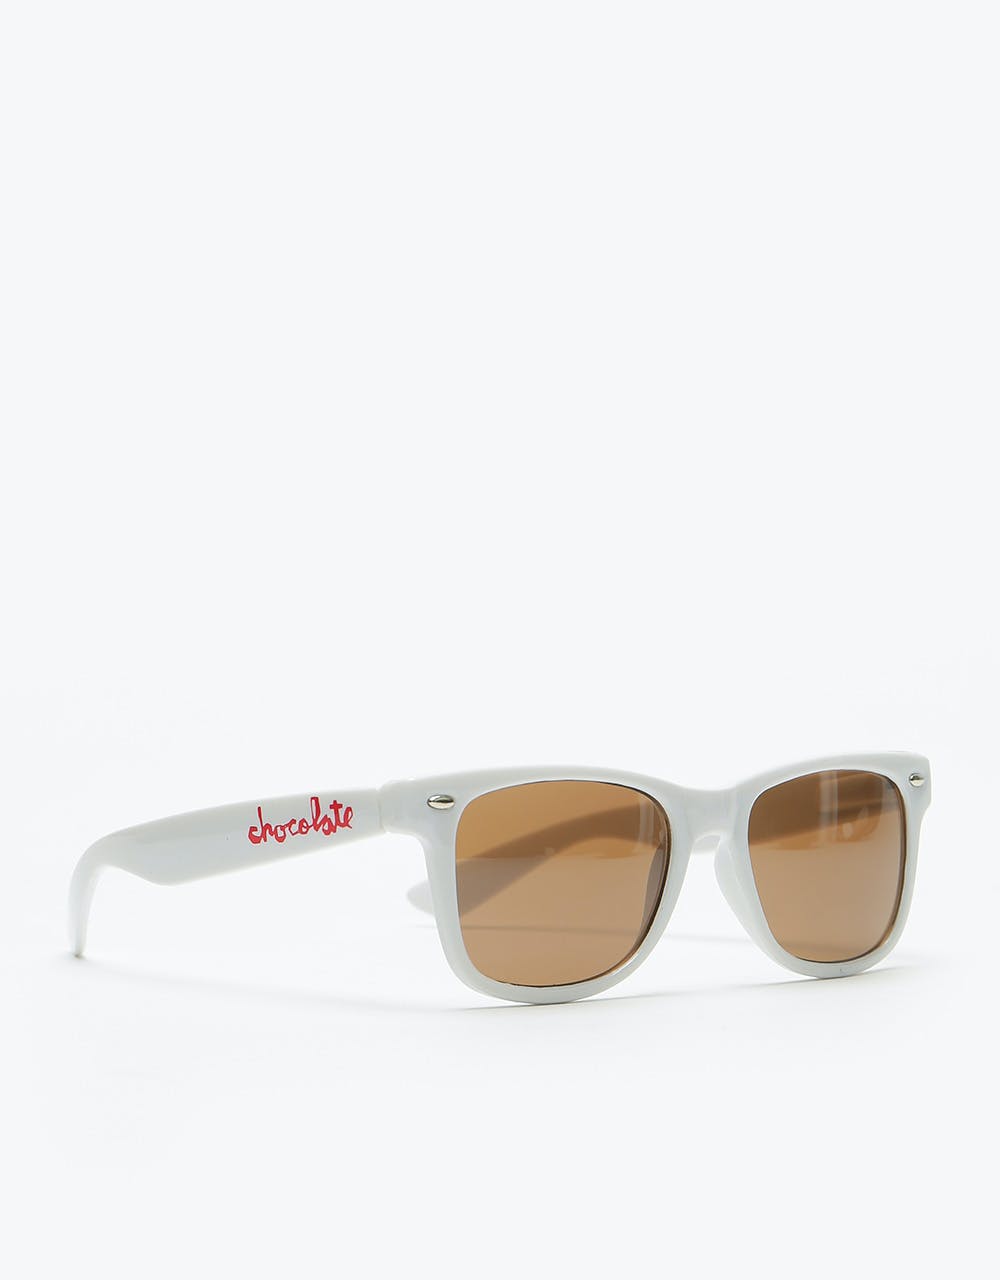 Choclate Chunk Sunglasses - White